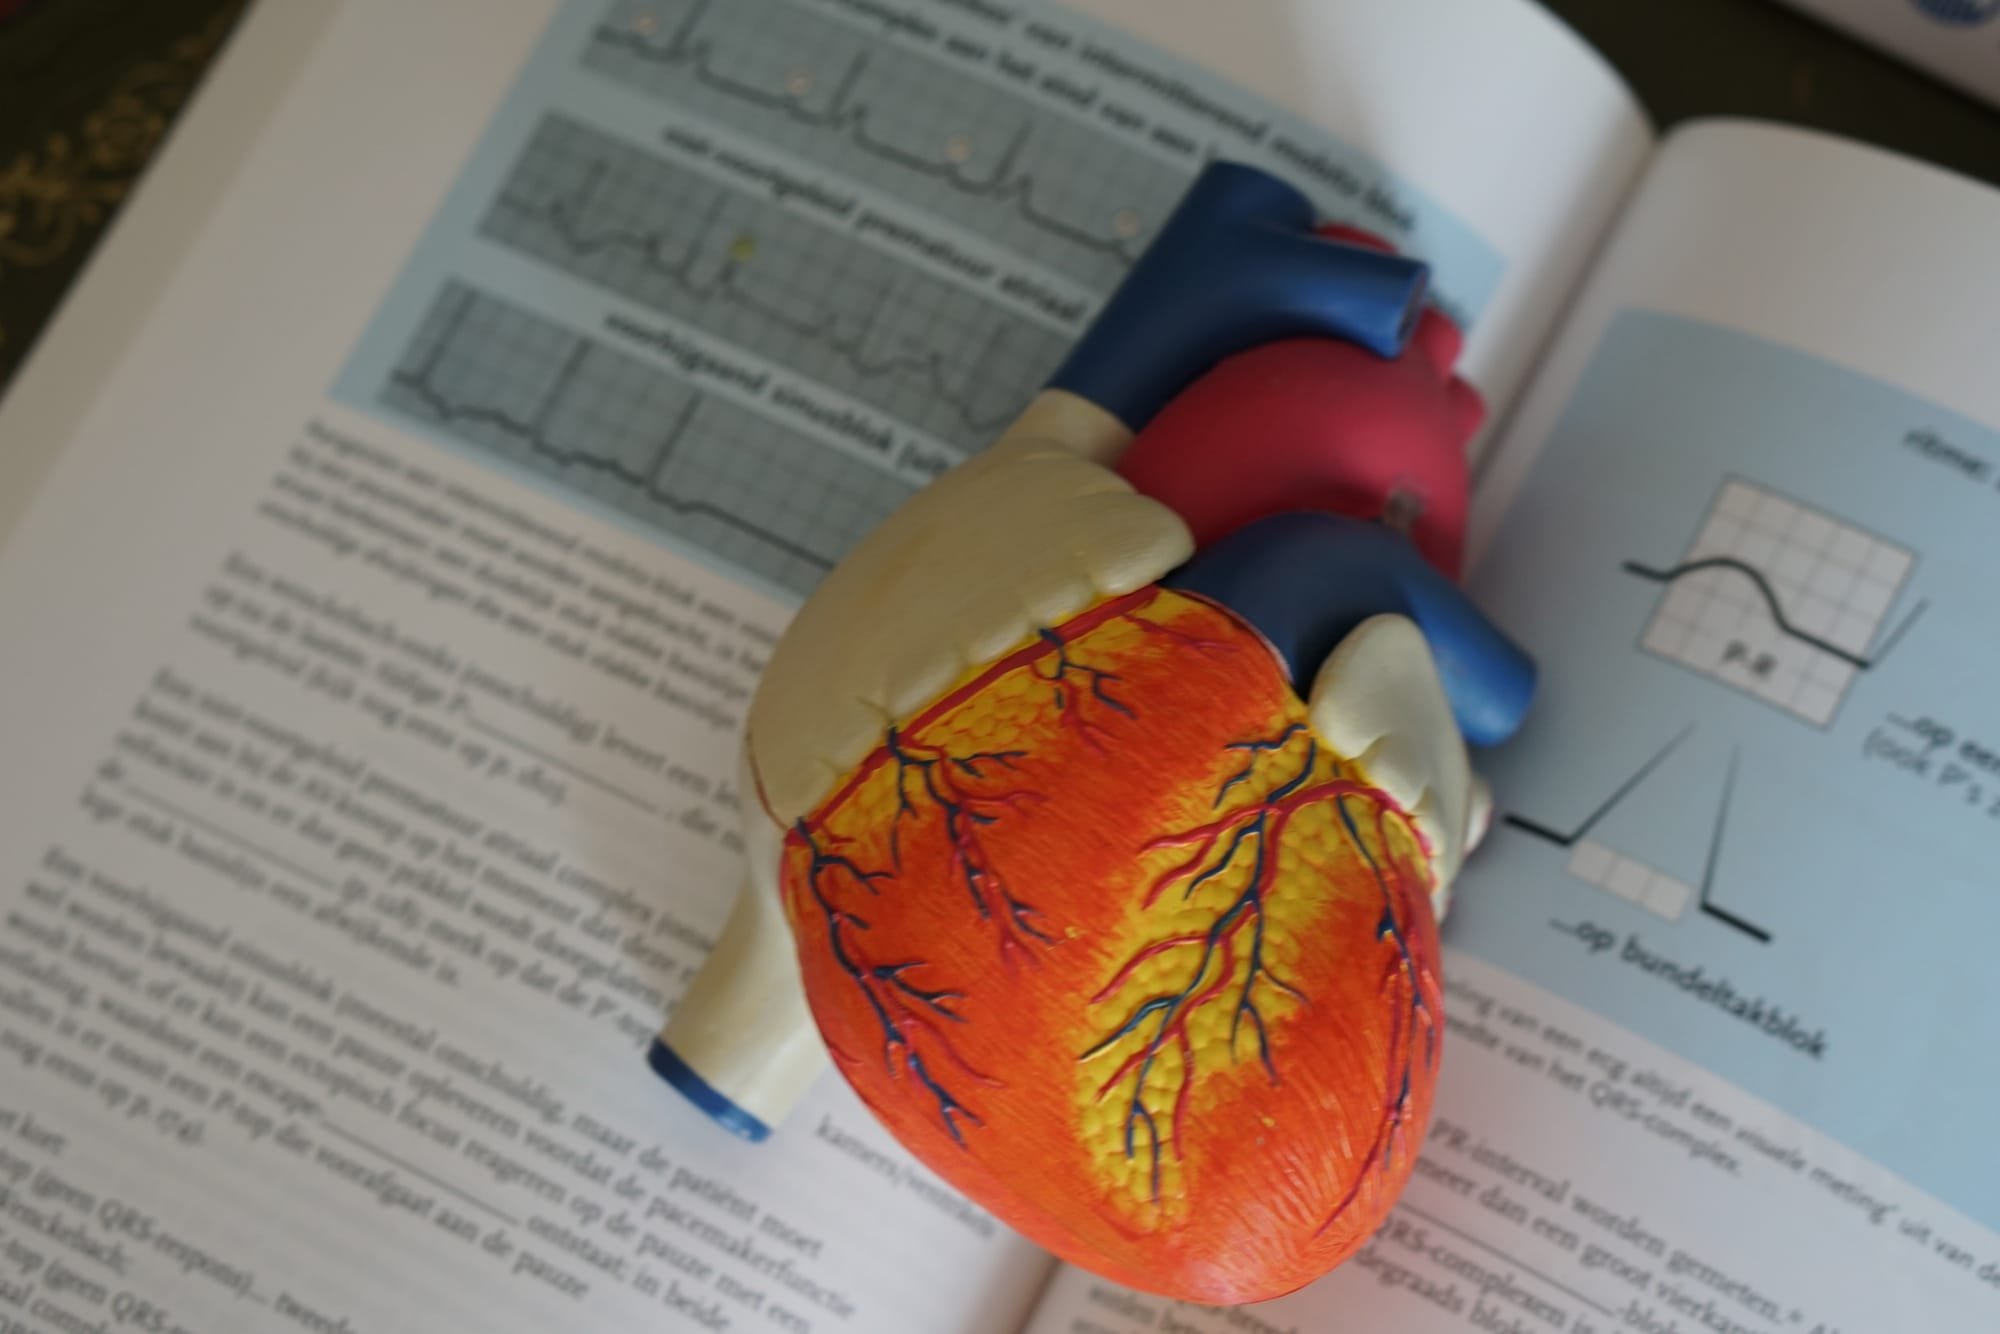 Mengenal Intervensi Kardiologi Untuk Atasi Permasalahan Jantung